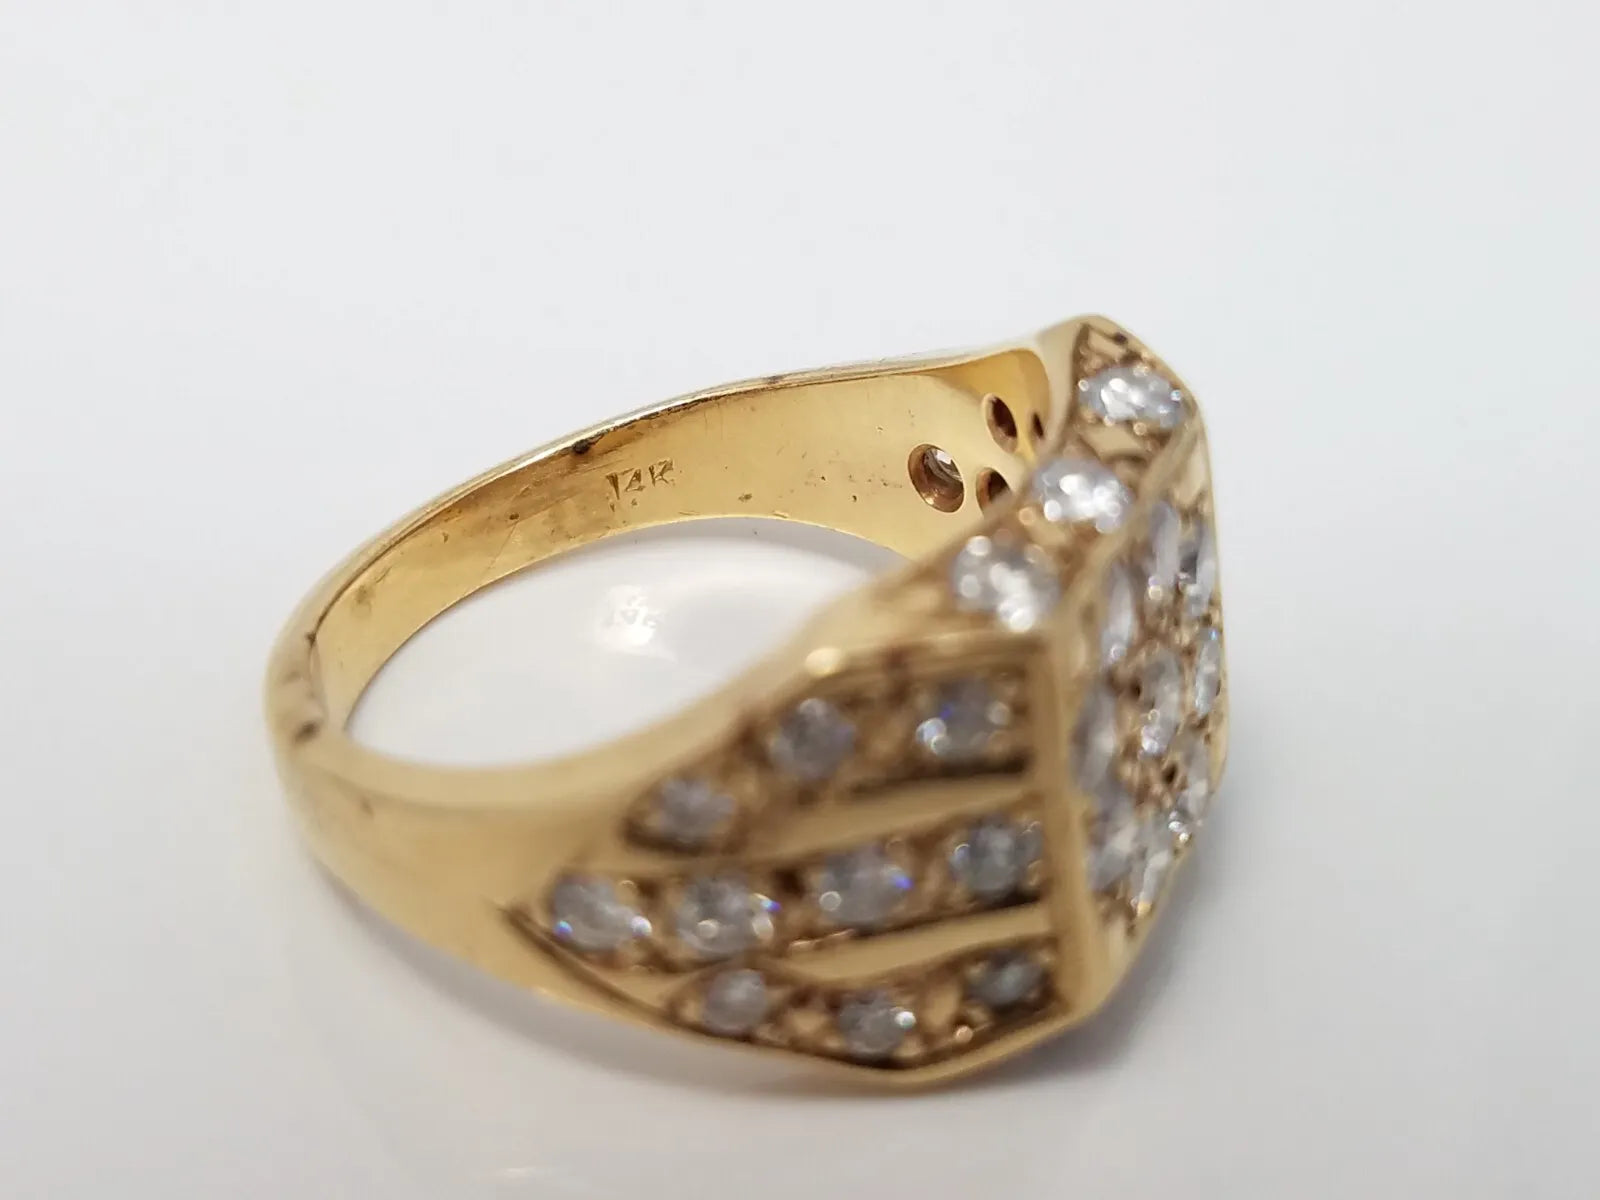 Handsome 1ctw Natural Diamond 14k Gold Men's Ring